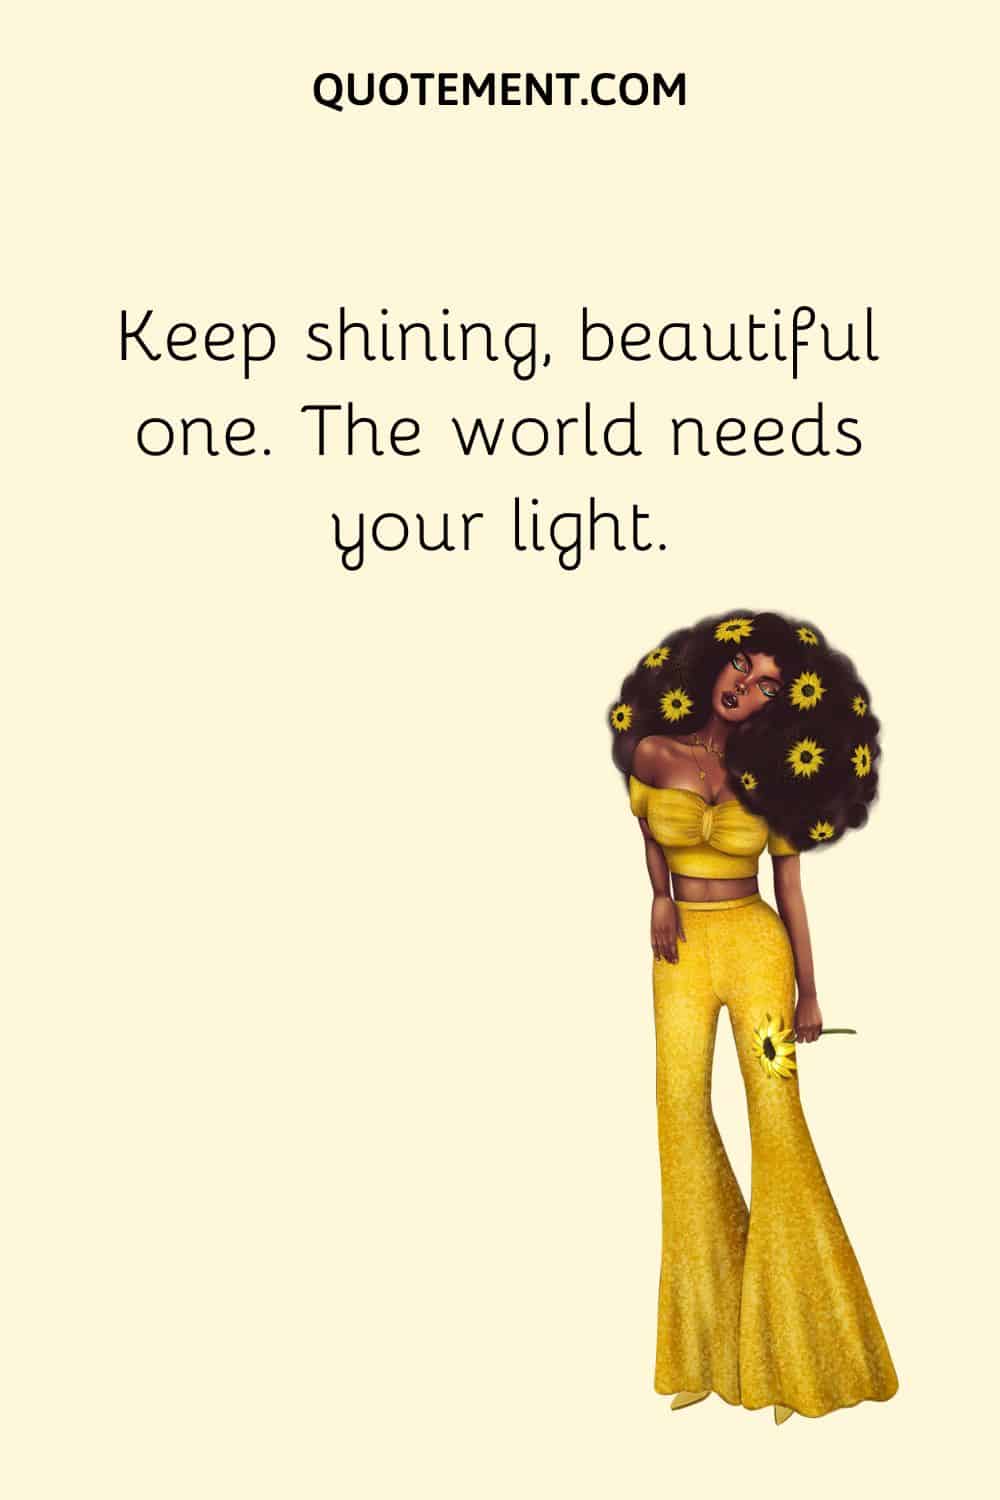 Keep shining, beautiful one